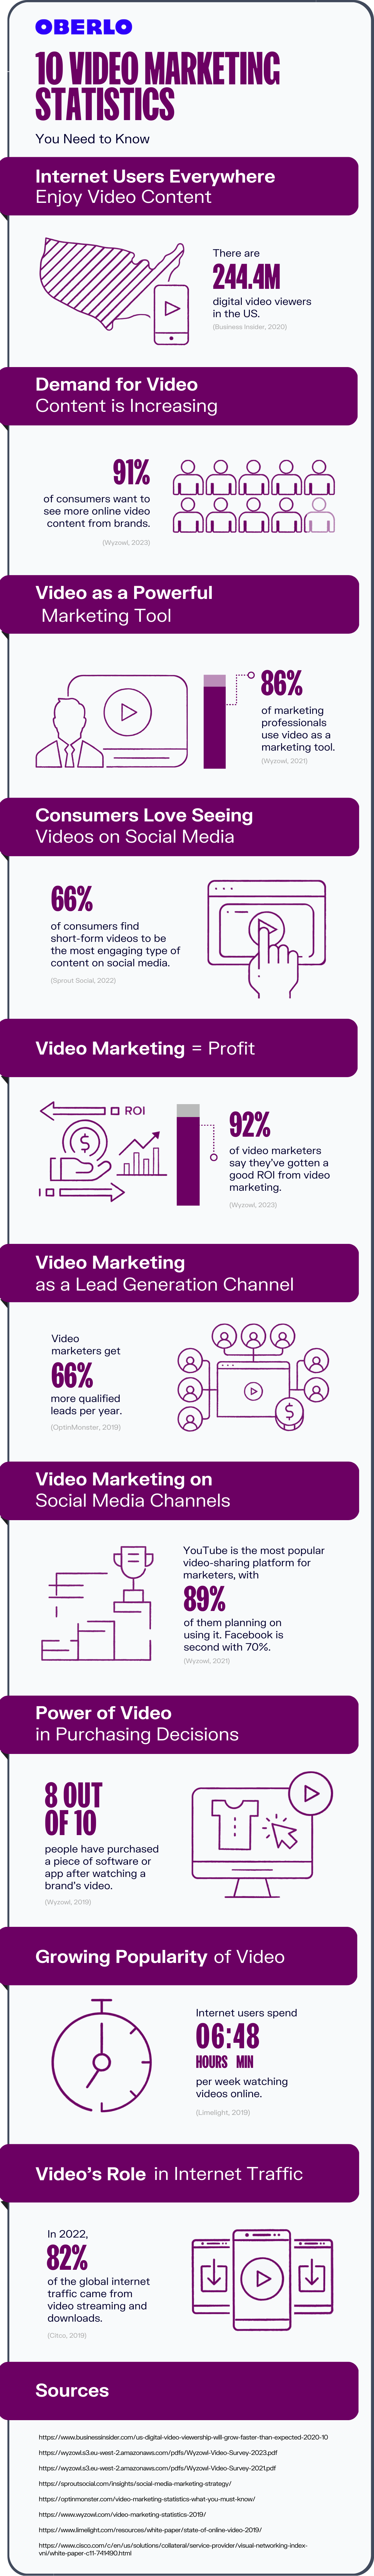 Video marketing statistics full infographic